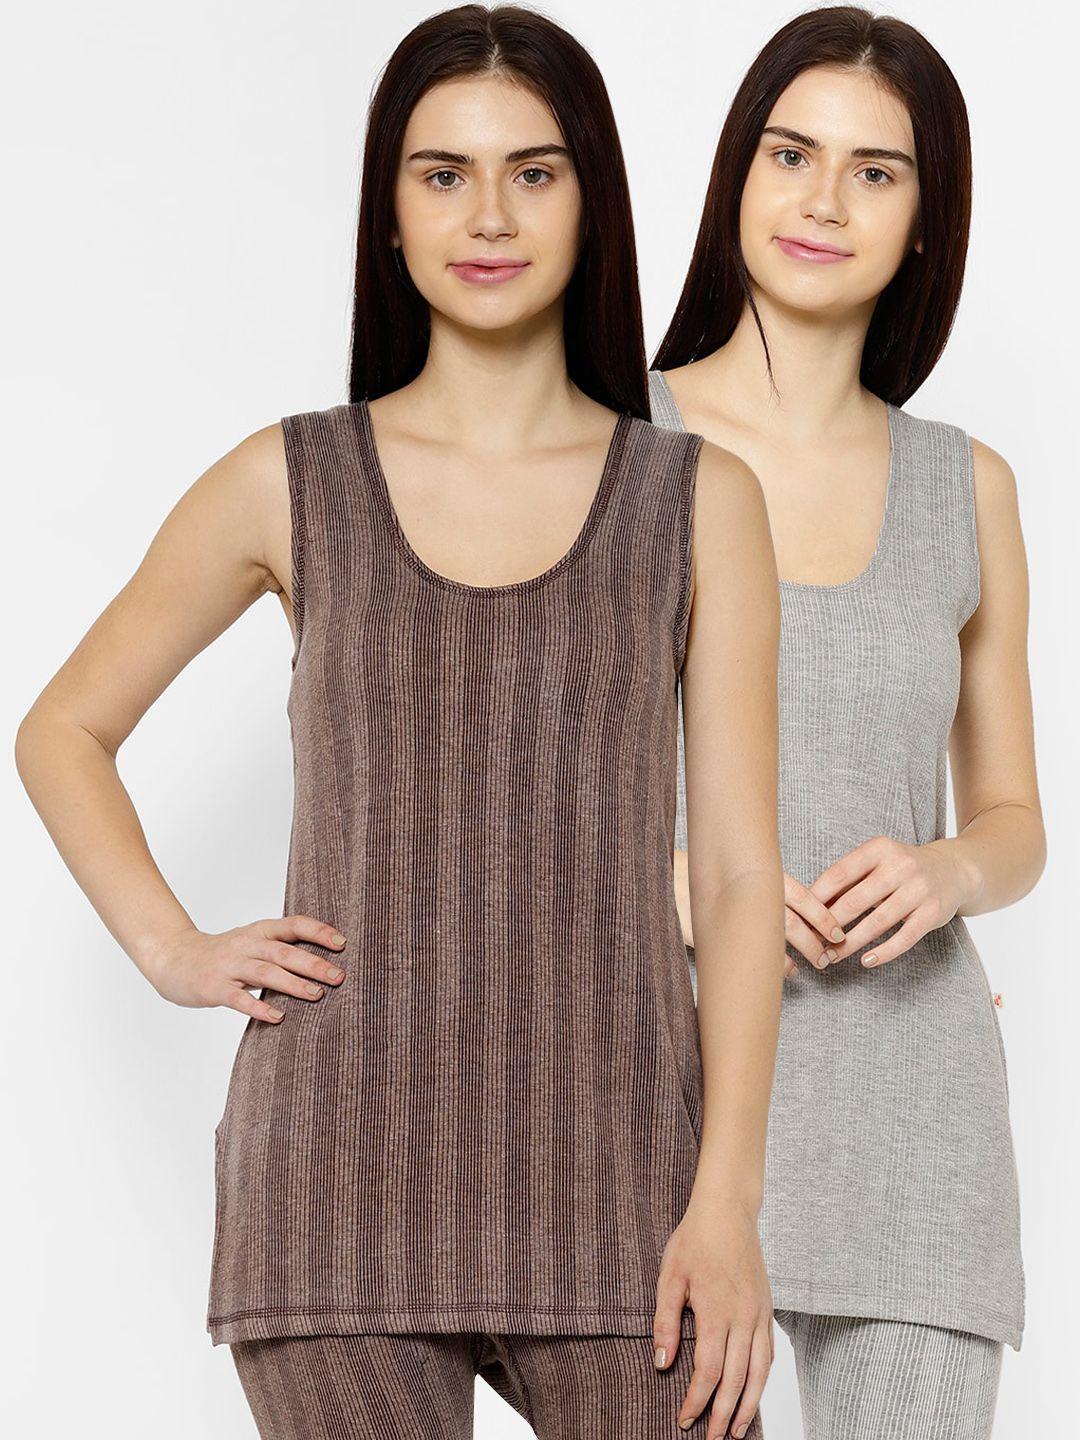 vimal jonney women pack of 2 grey & brown striped thermal tops